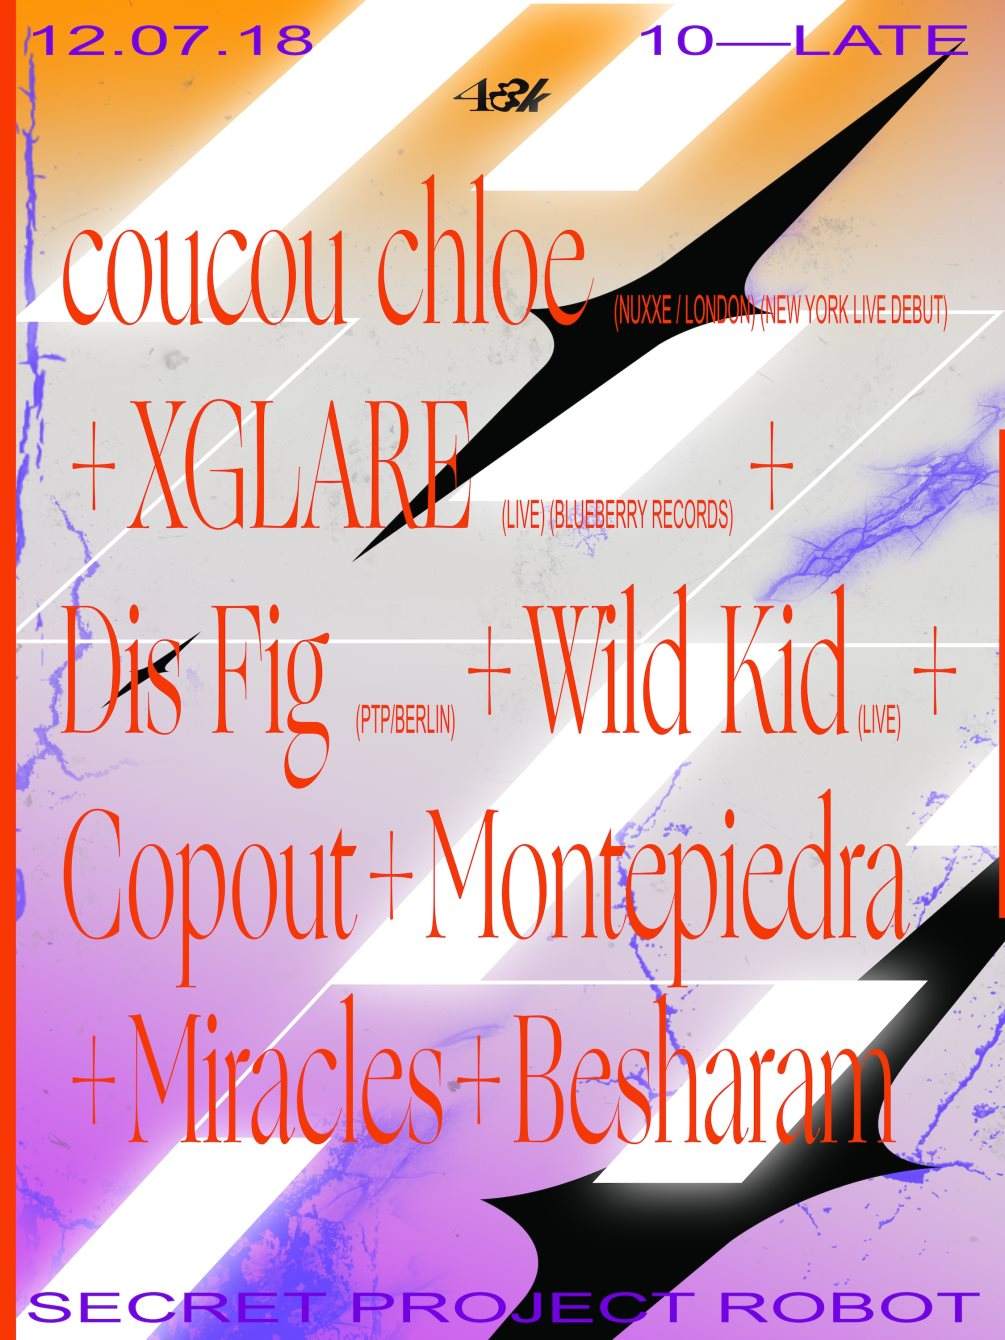 Geofront-02: Coucou Chloe Live, Dis Fig, XGLARE Live - フライヤー表